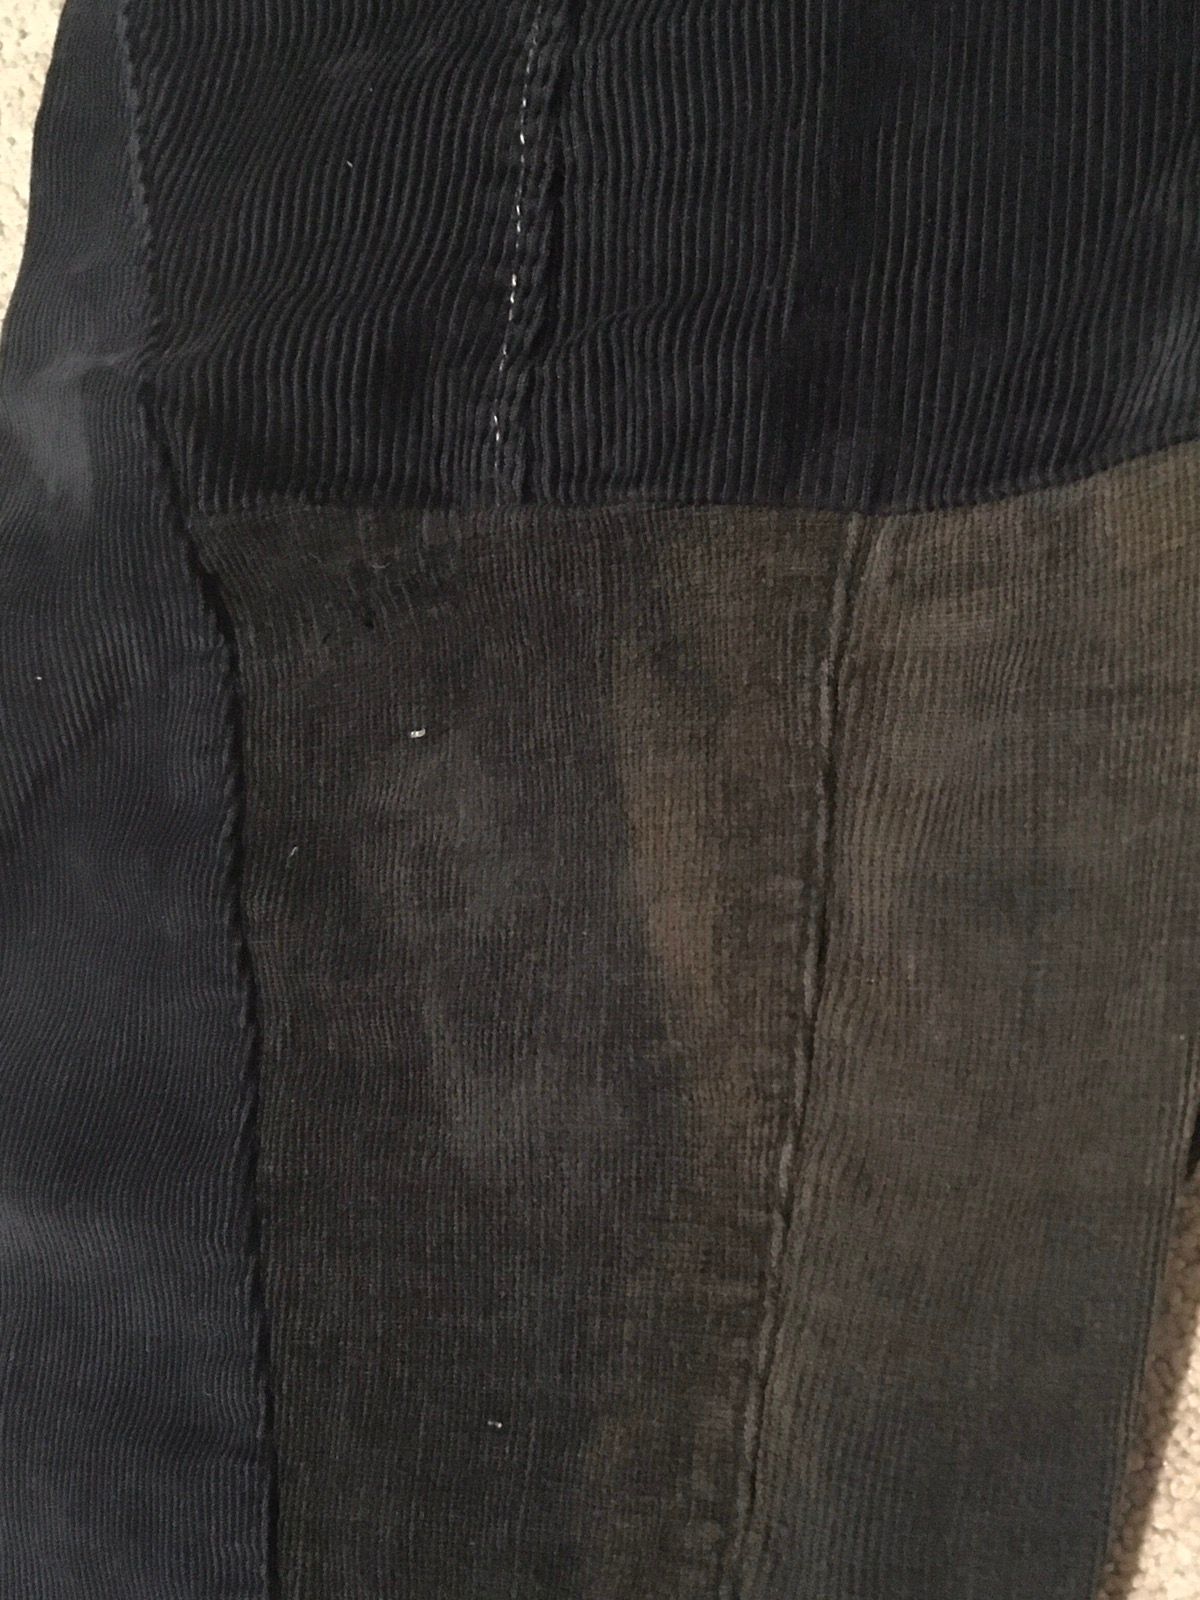 Needles Rebuild Patchwork Corduroy Trousers Size US 29 - 10 Thumbnail